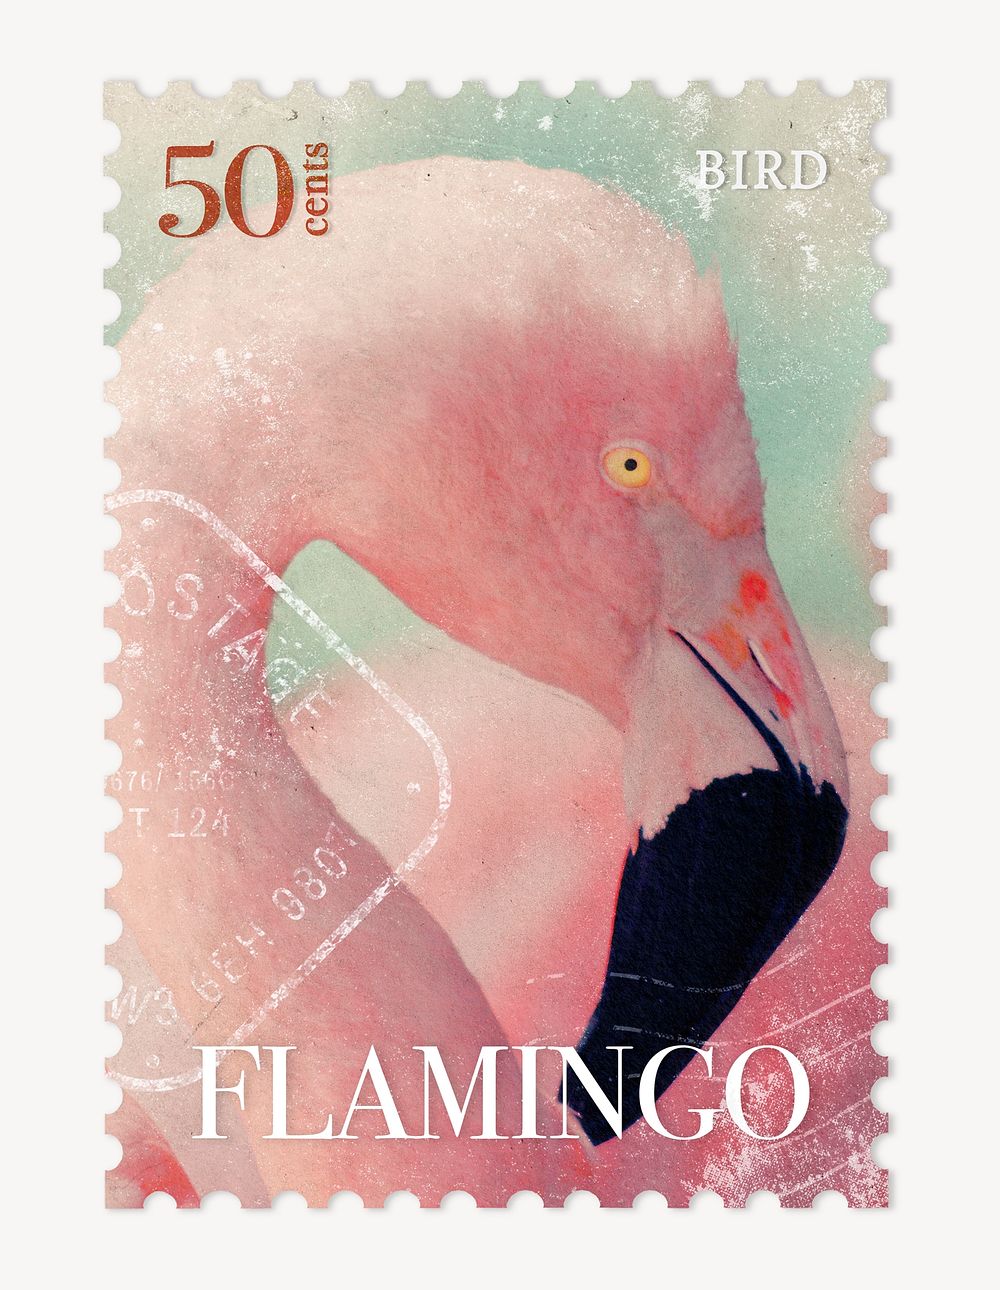 Flamingo postage stamp, aesthetic animal graphic